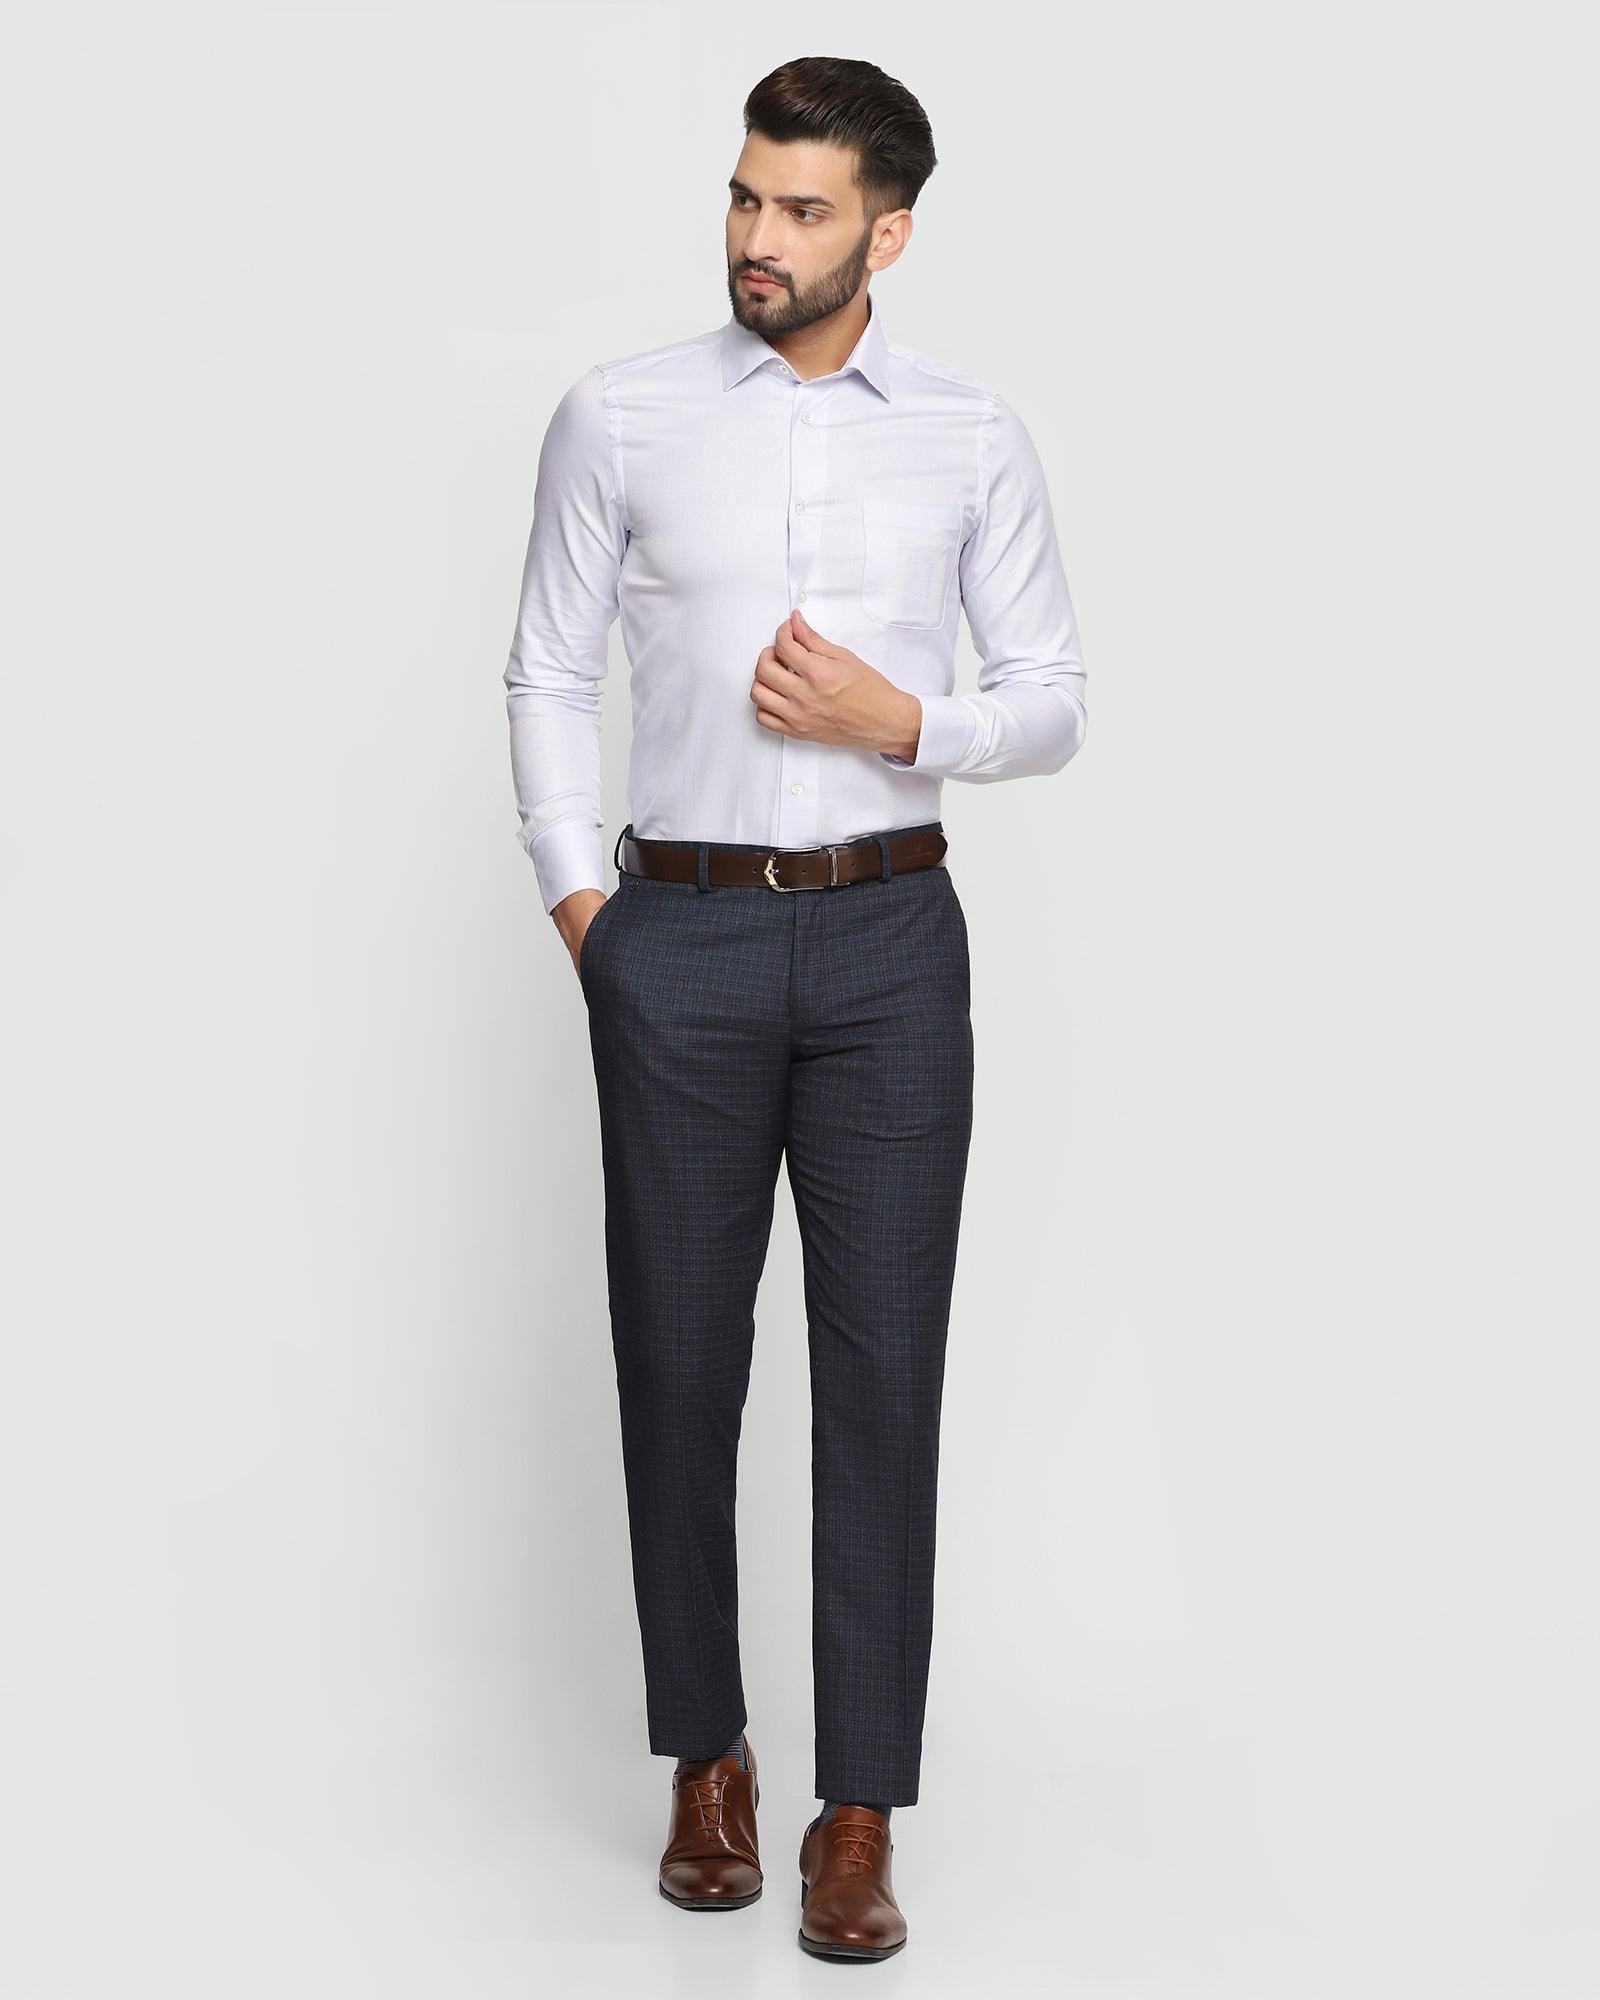 Men's Formal & Dress Trousers Outlet | Suit Direct